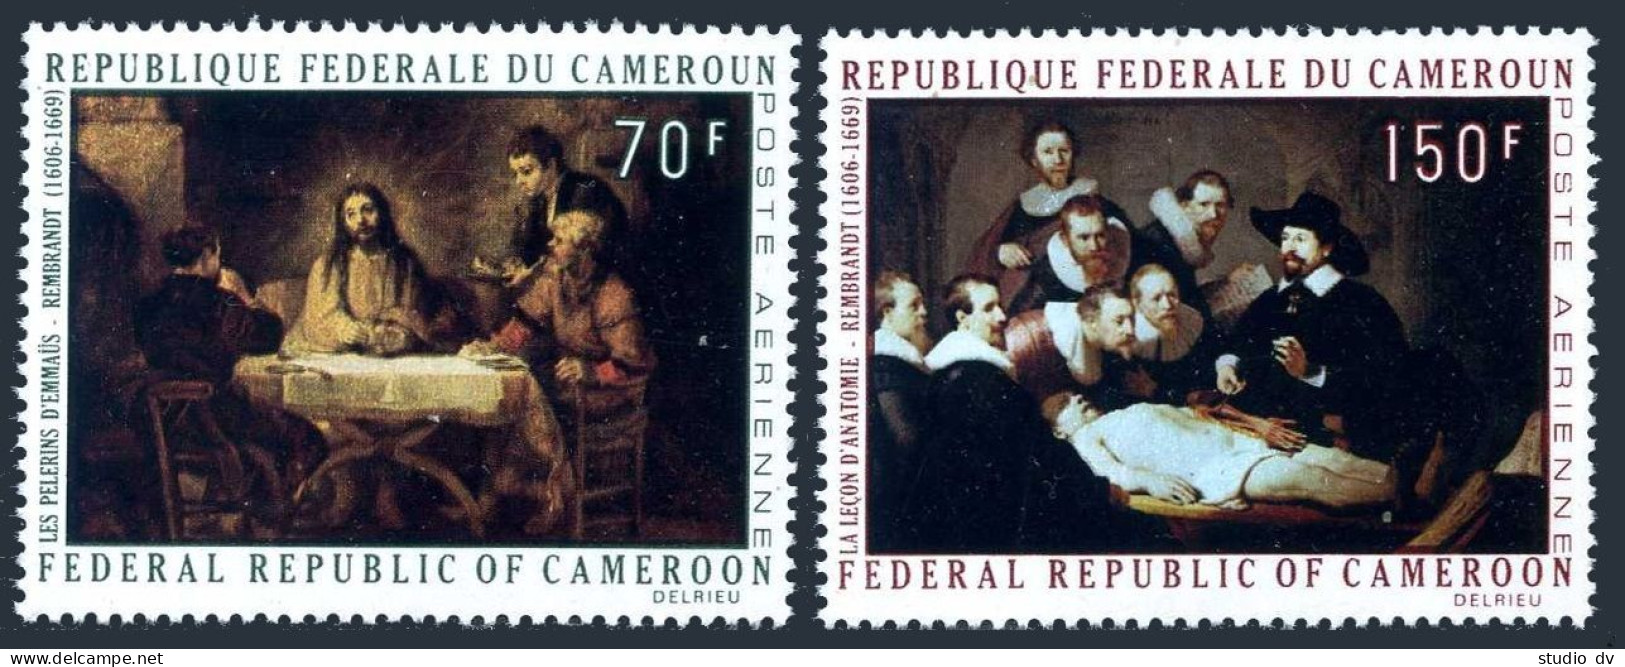 Cameroun C154-C155, MNH. Michel 631-632. Paintings By Rembrandt, 1970. - Kameroen (1960-...)